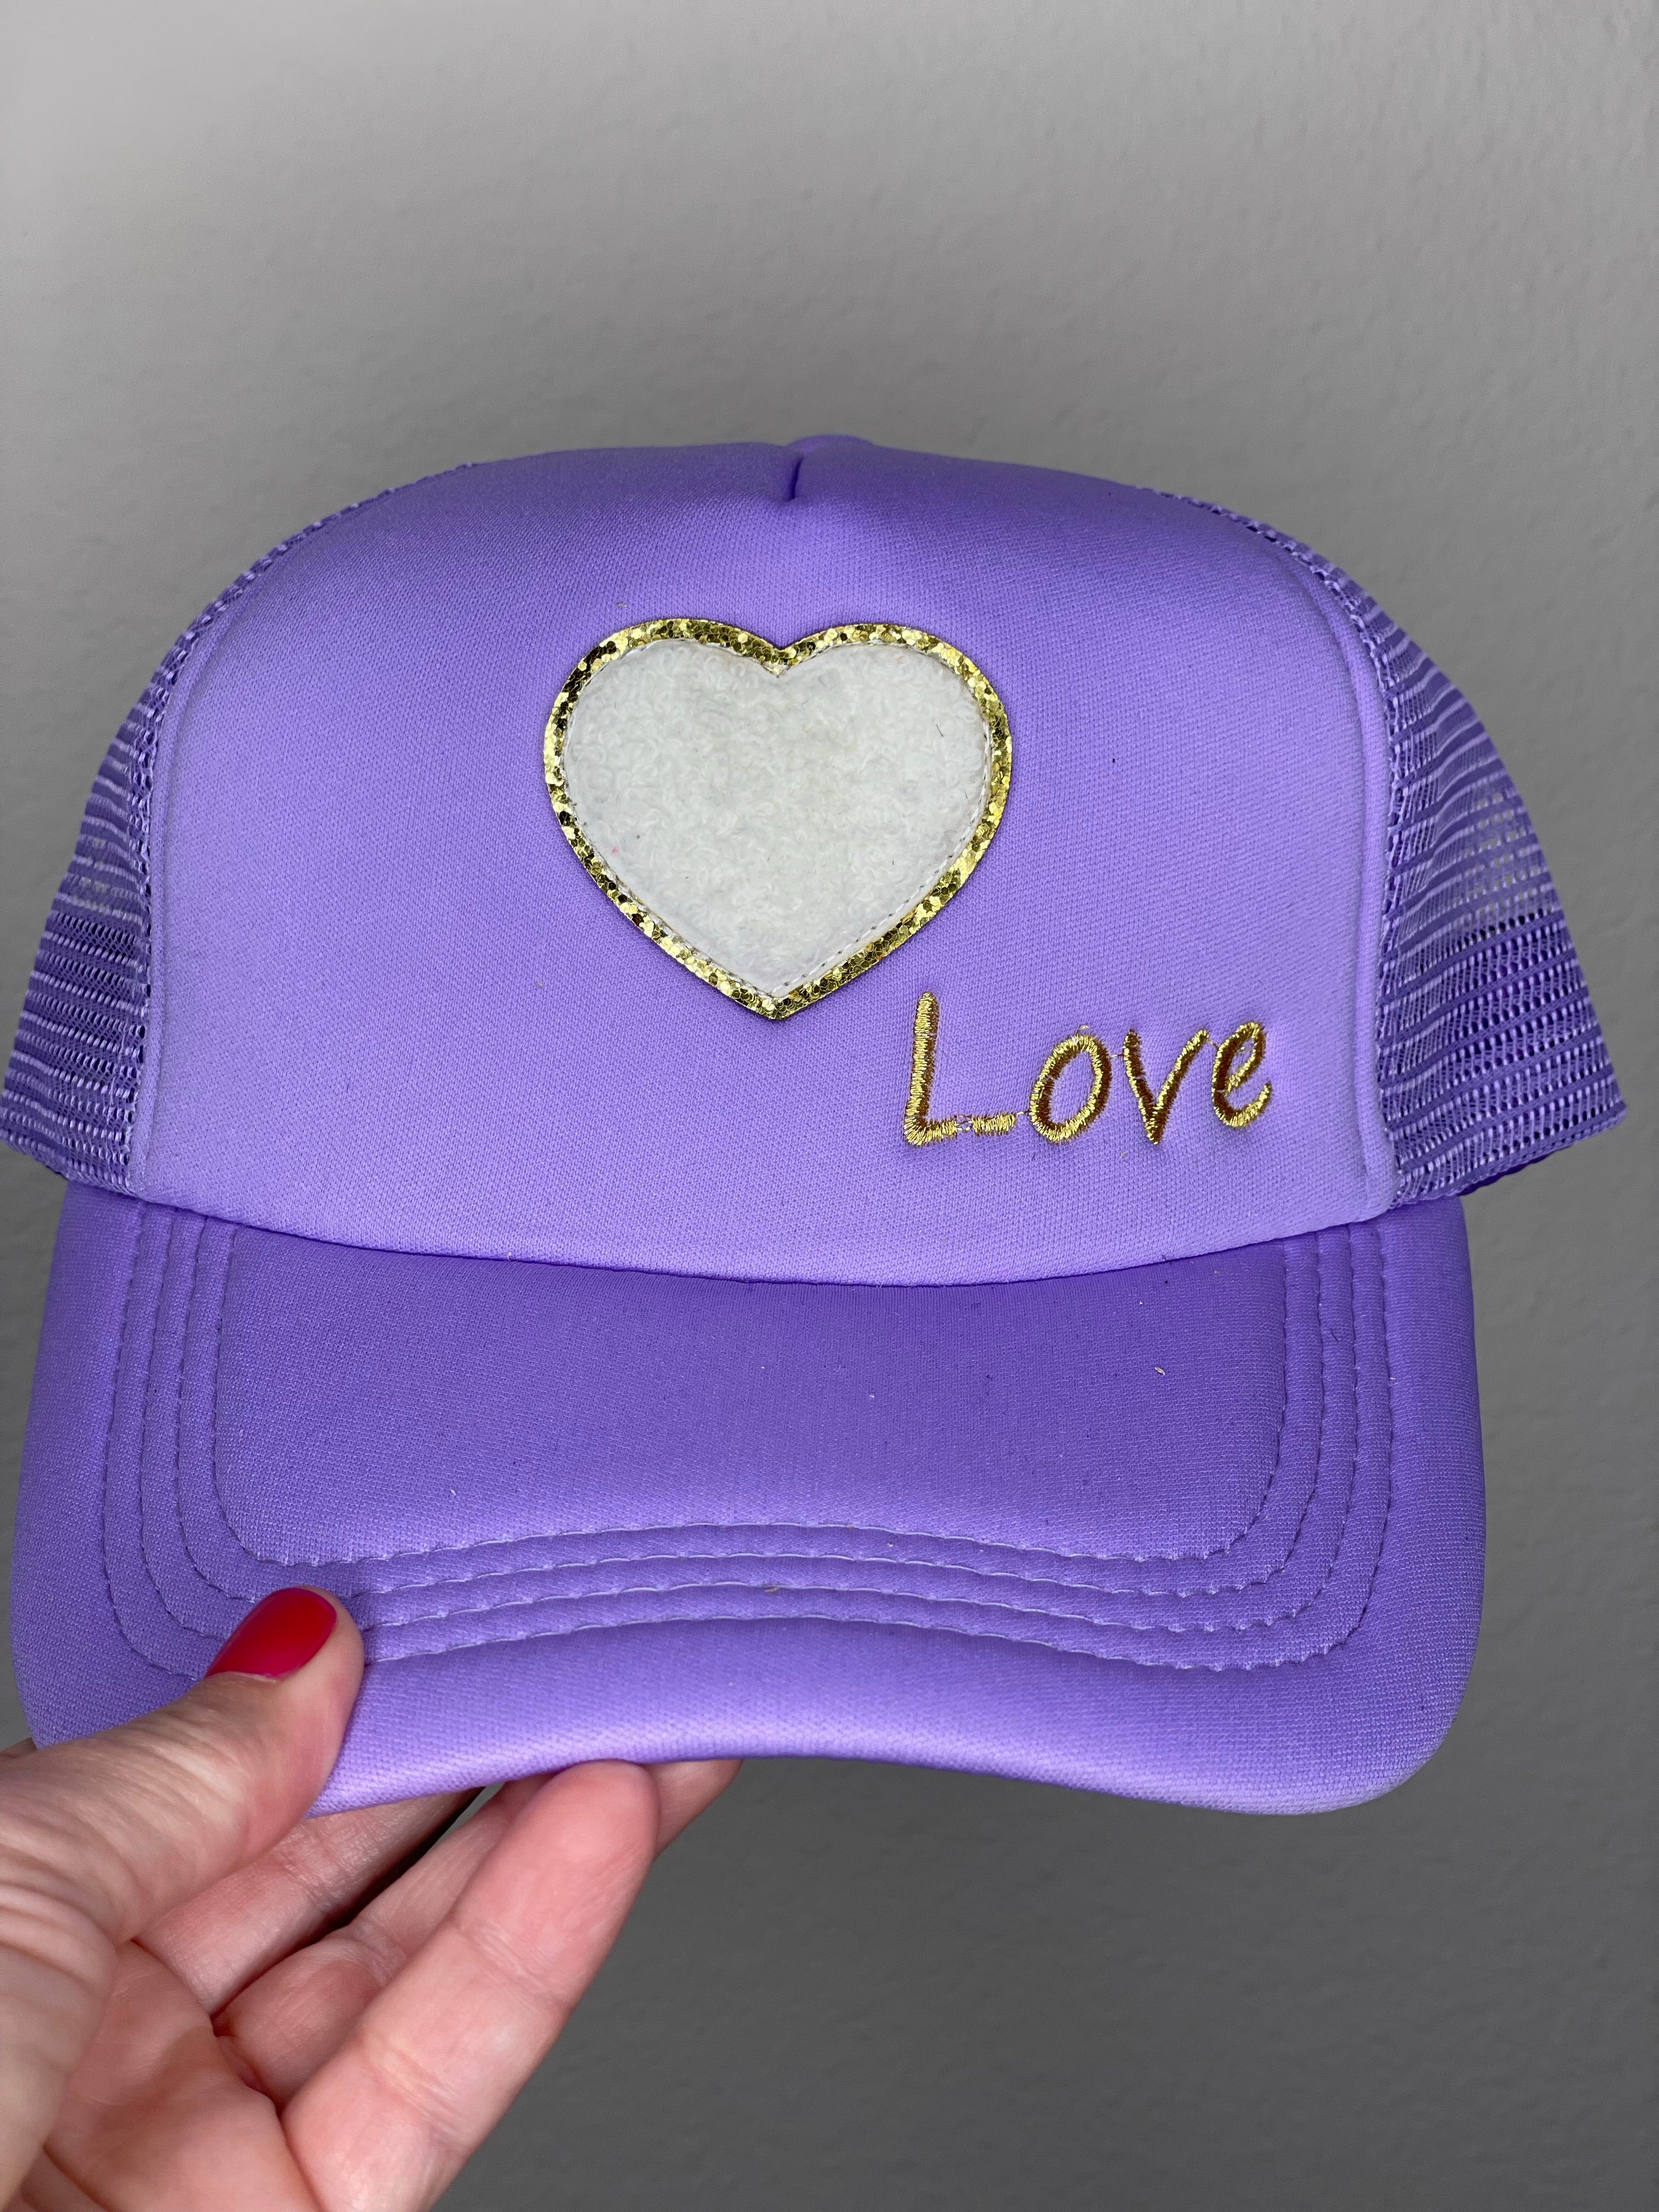 Love Trucker Hat.